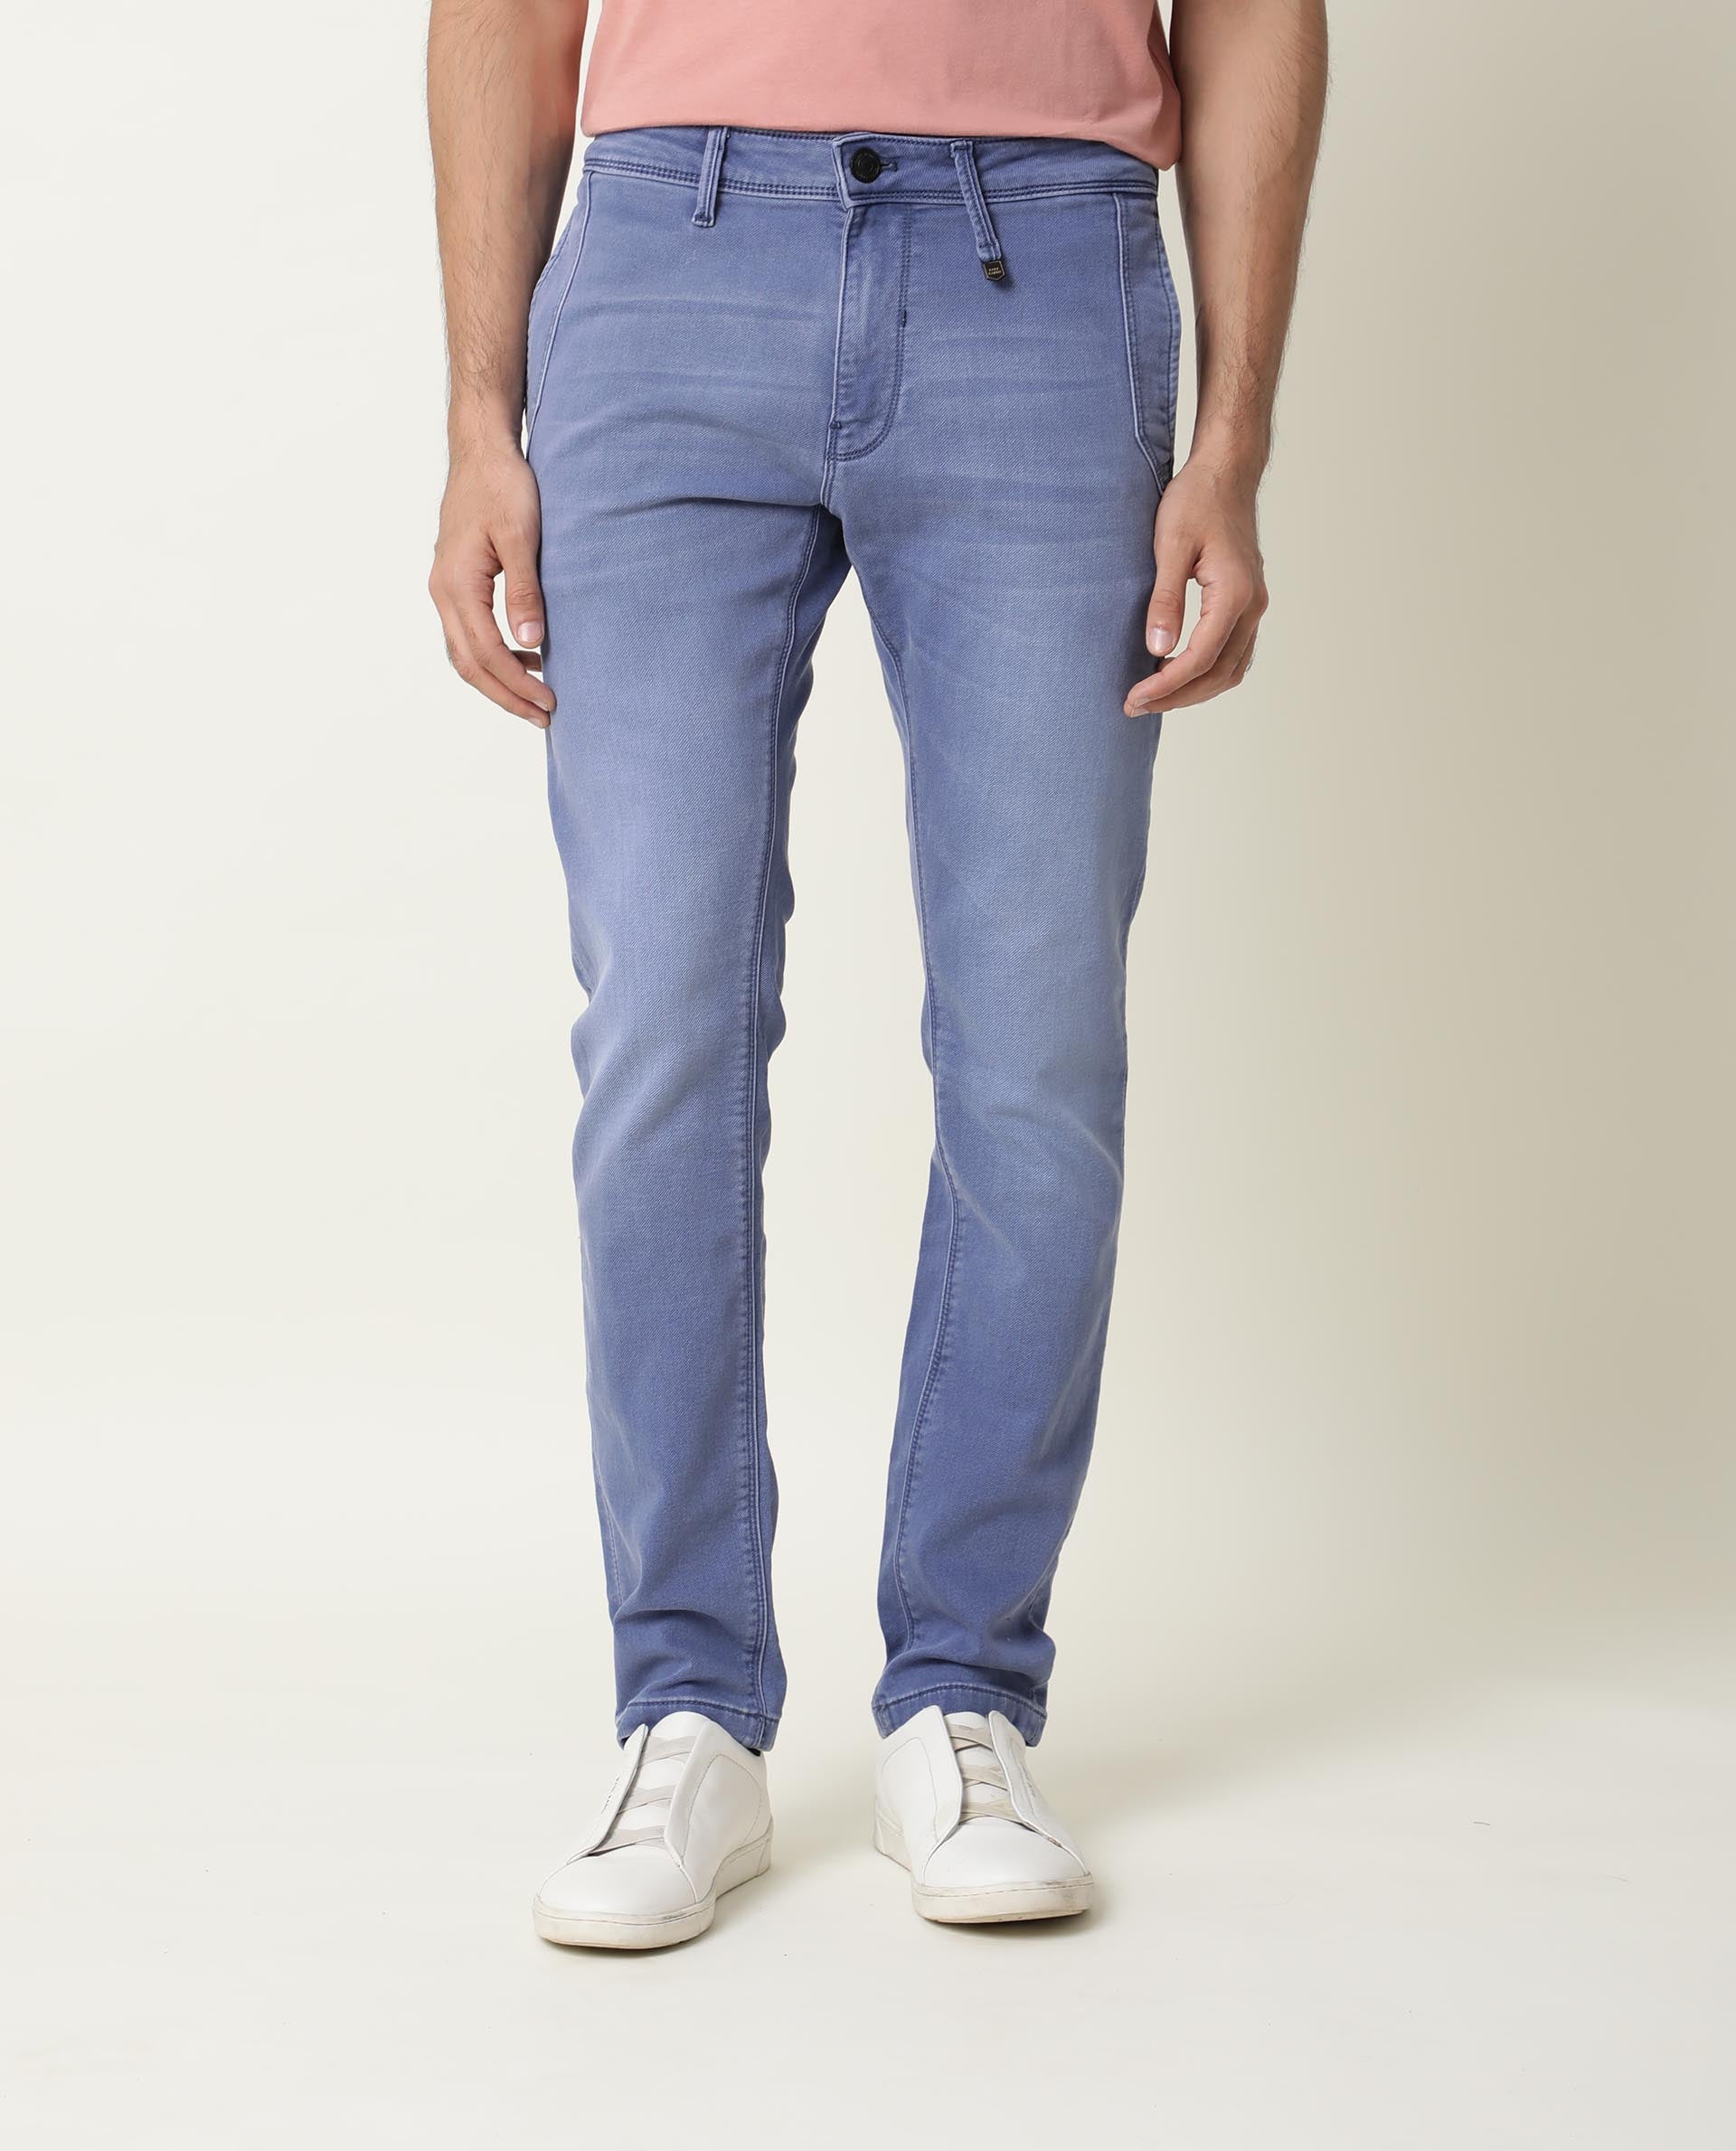 Buy Levi's Men 511 Slim Fit Light Fade Mid-Rise Stretchable Jeans online